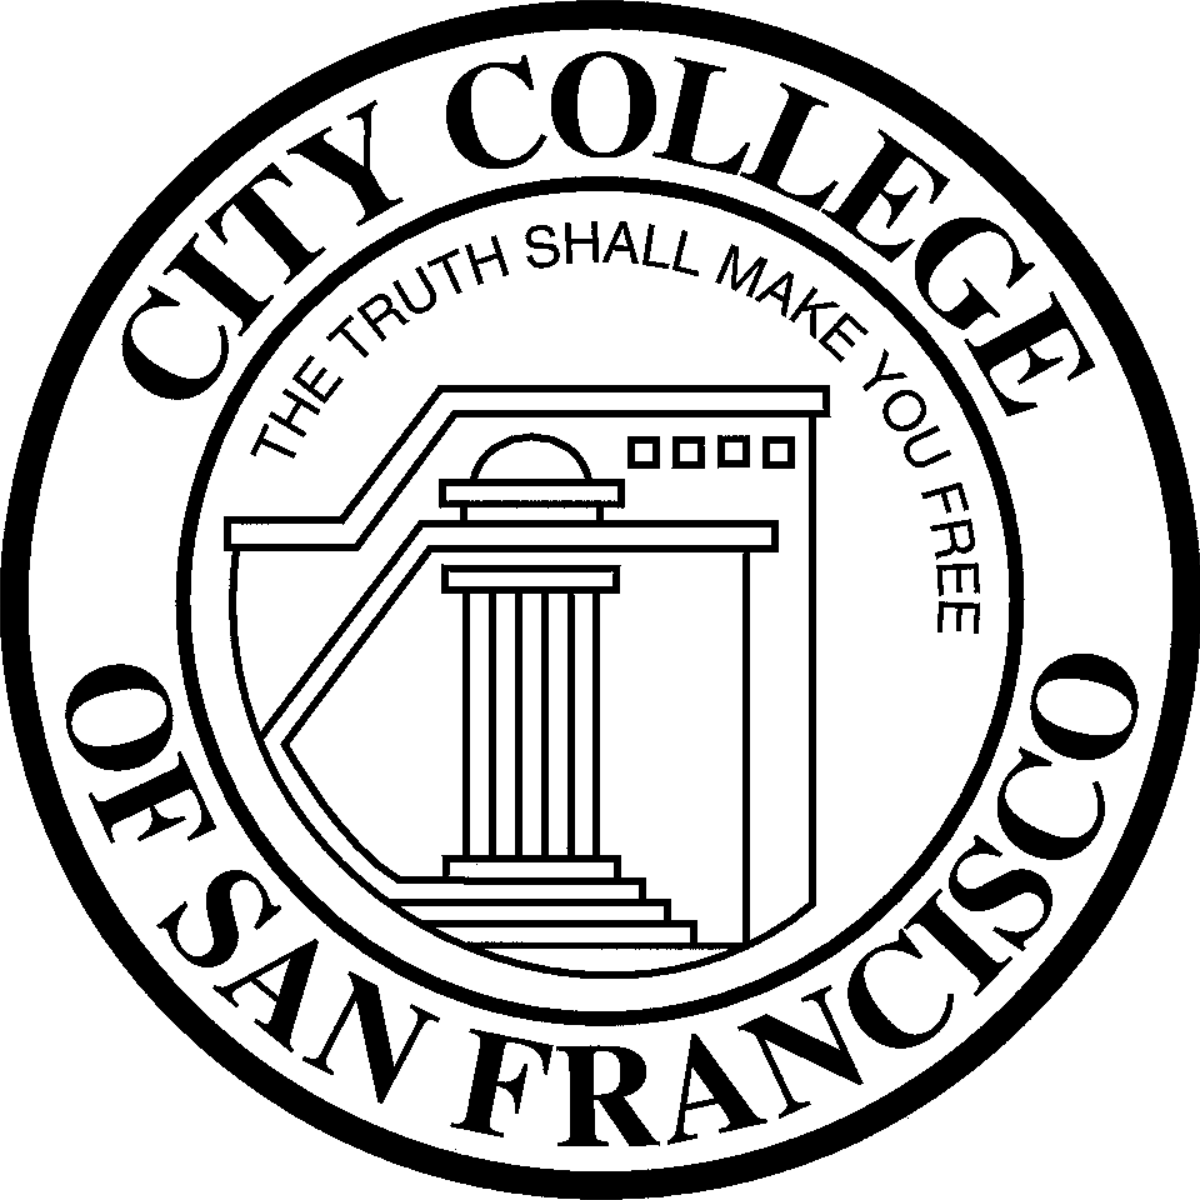 Red U San Francisco Based Start Up Logo - City College of San Francisco